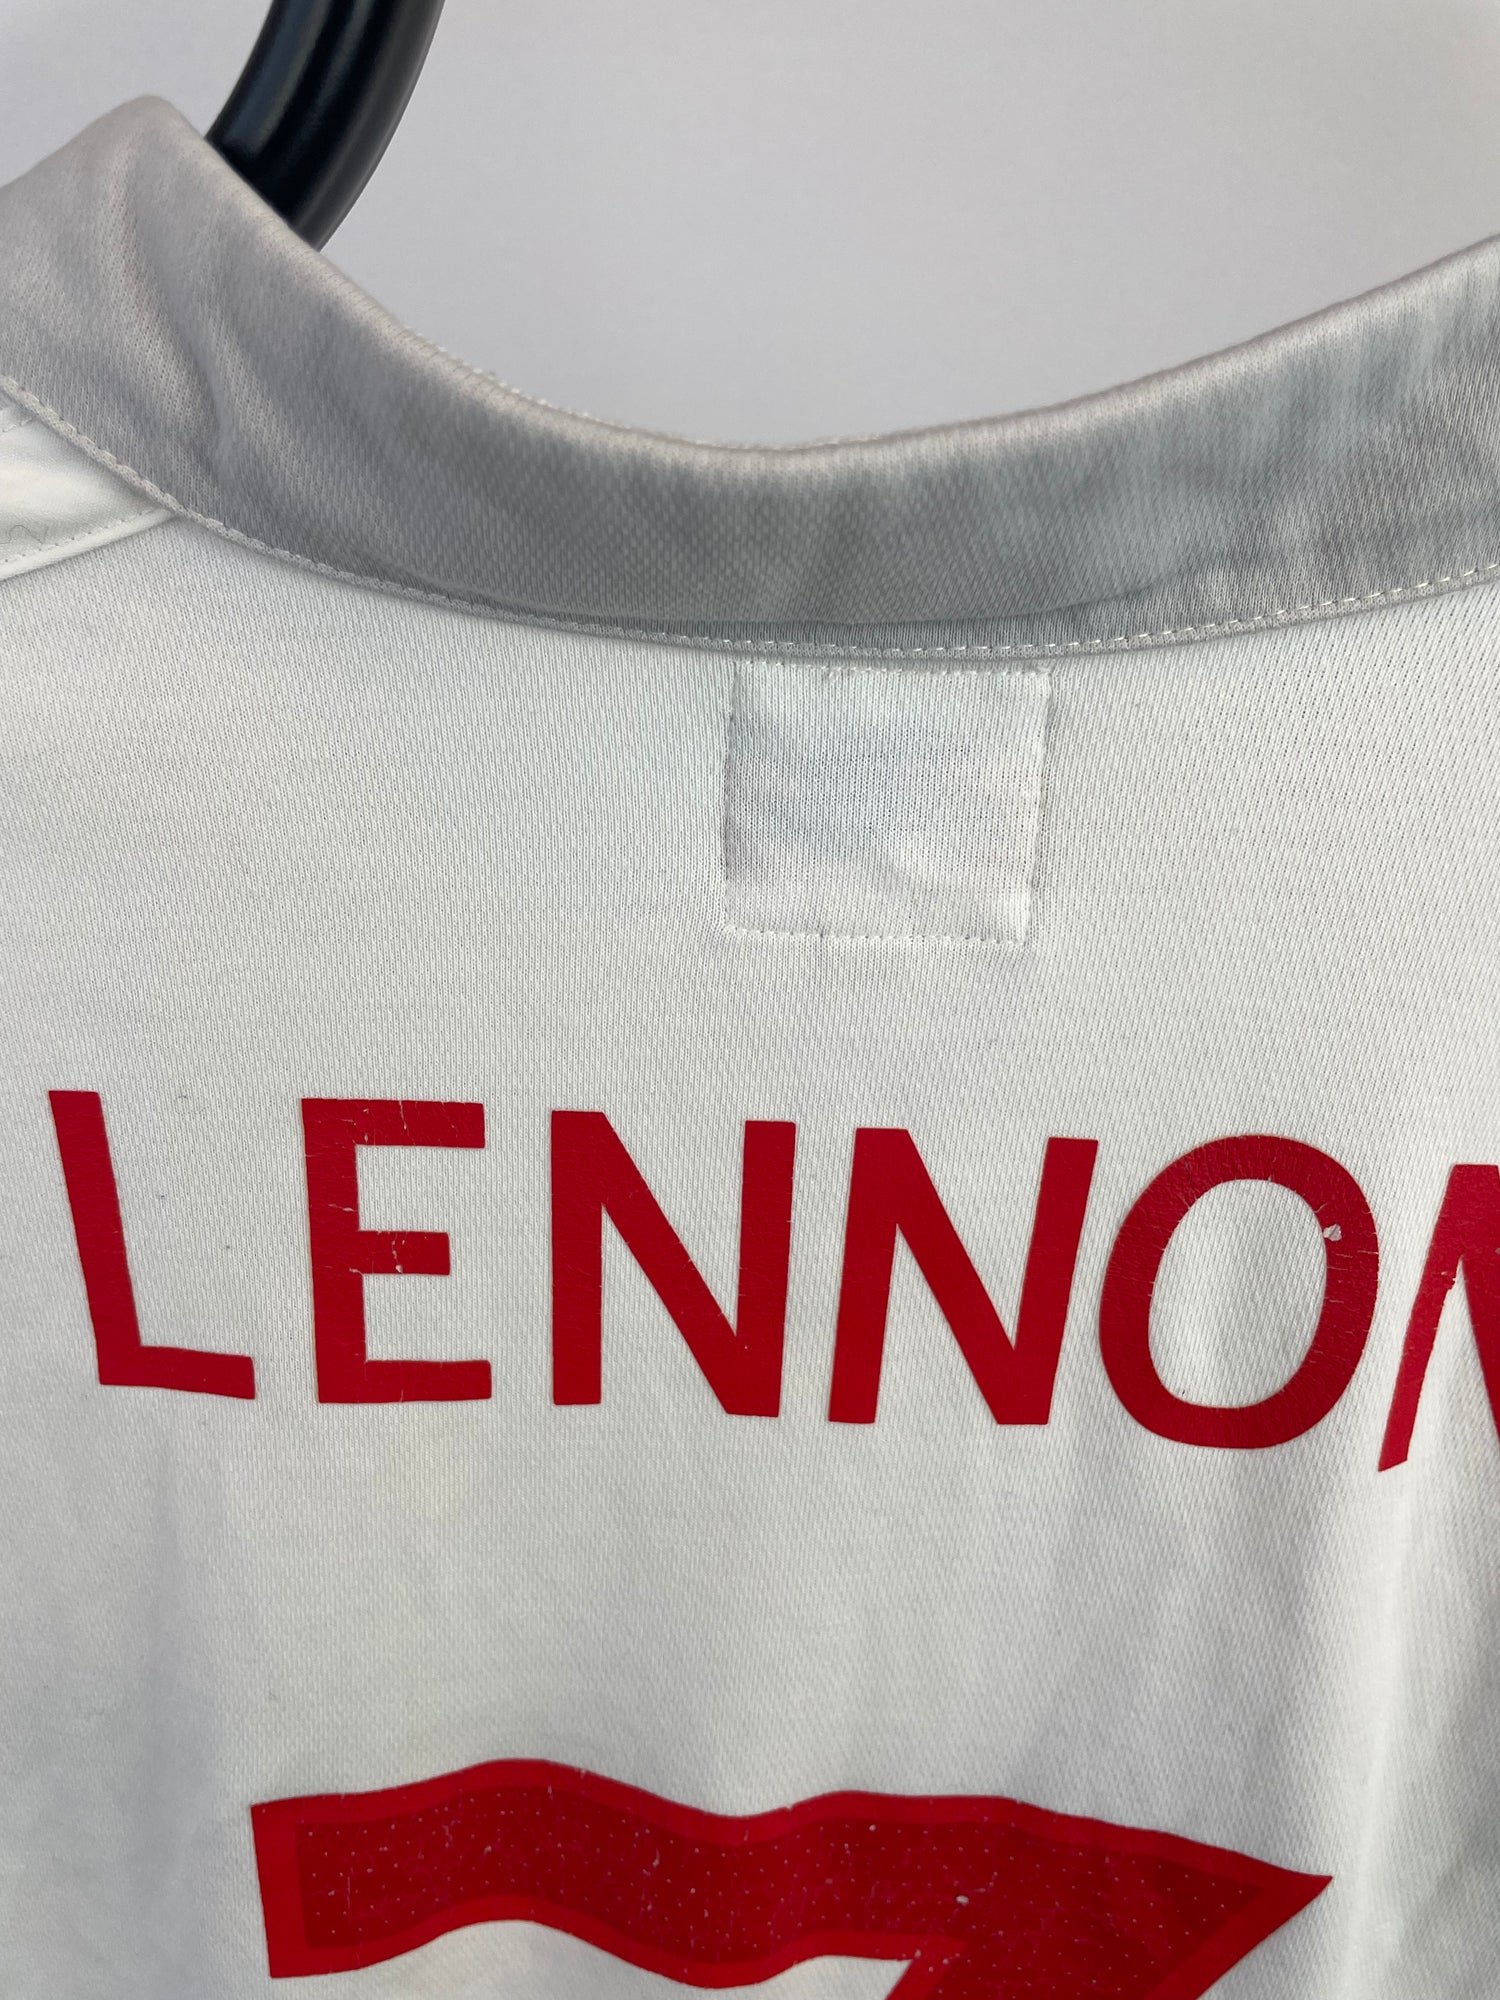 Aroon Lennon England 10/11 hjemme - XL